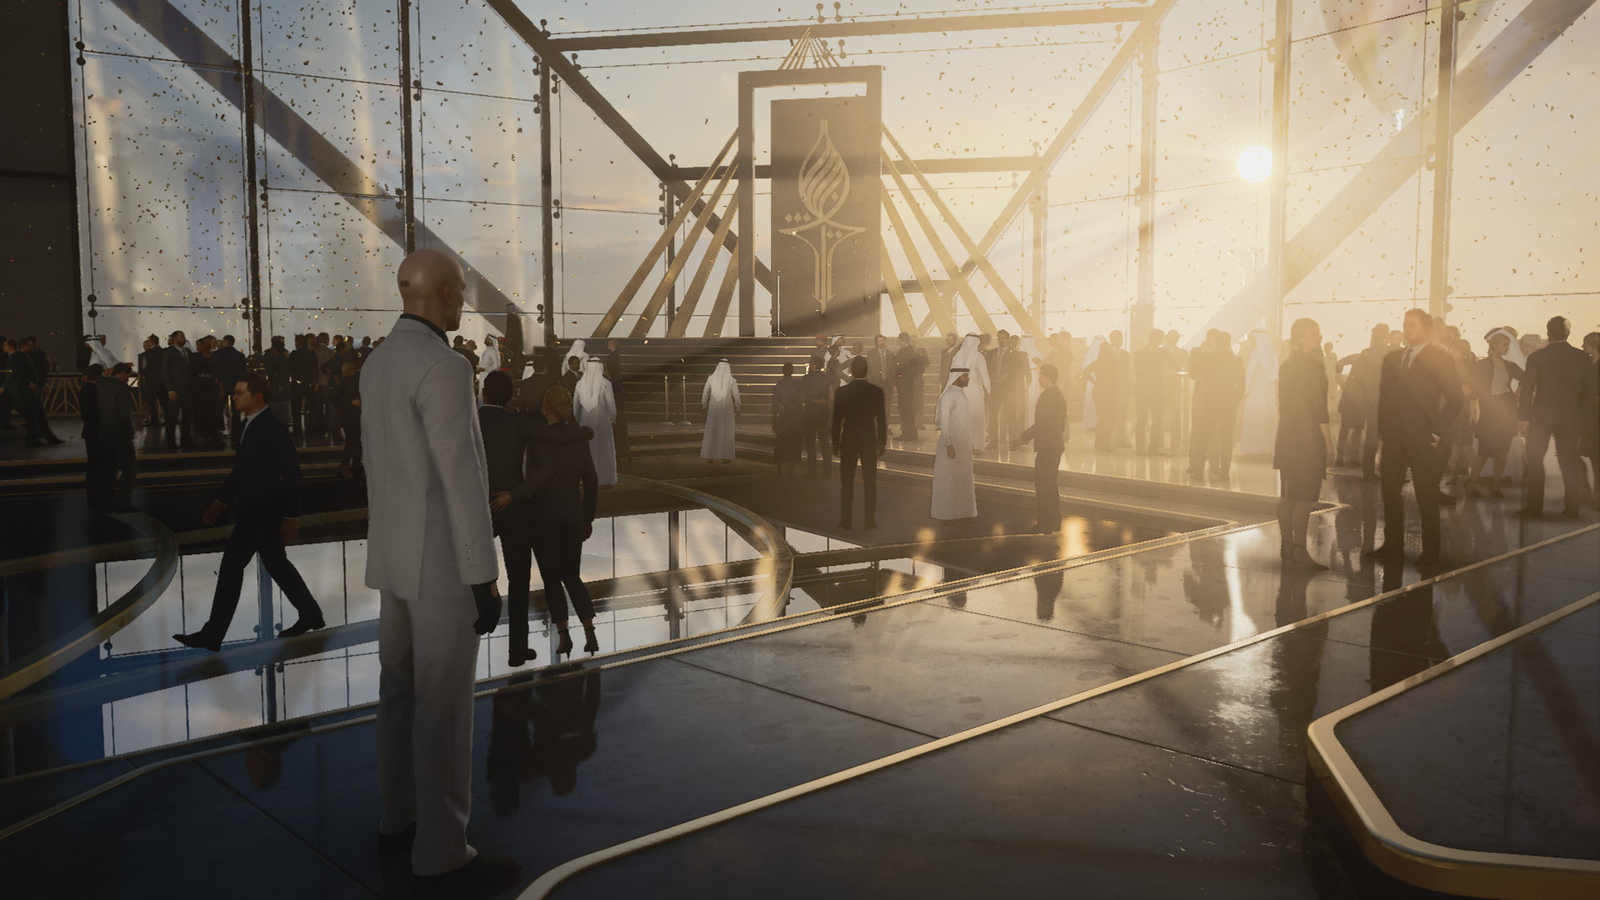 More 'Hitman 3' VR Gameplay Revealed in New Trailer